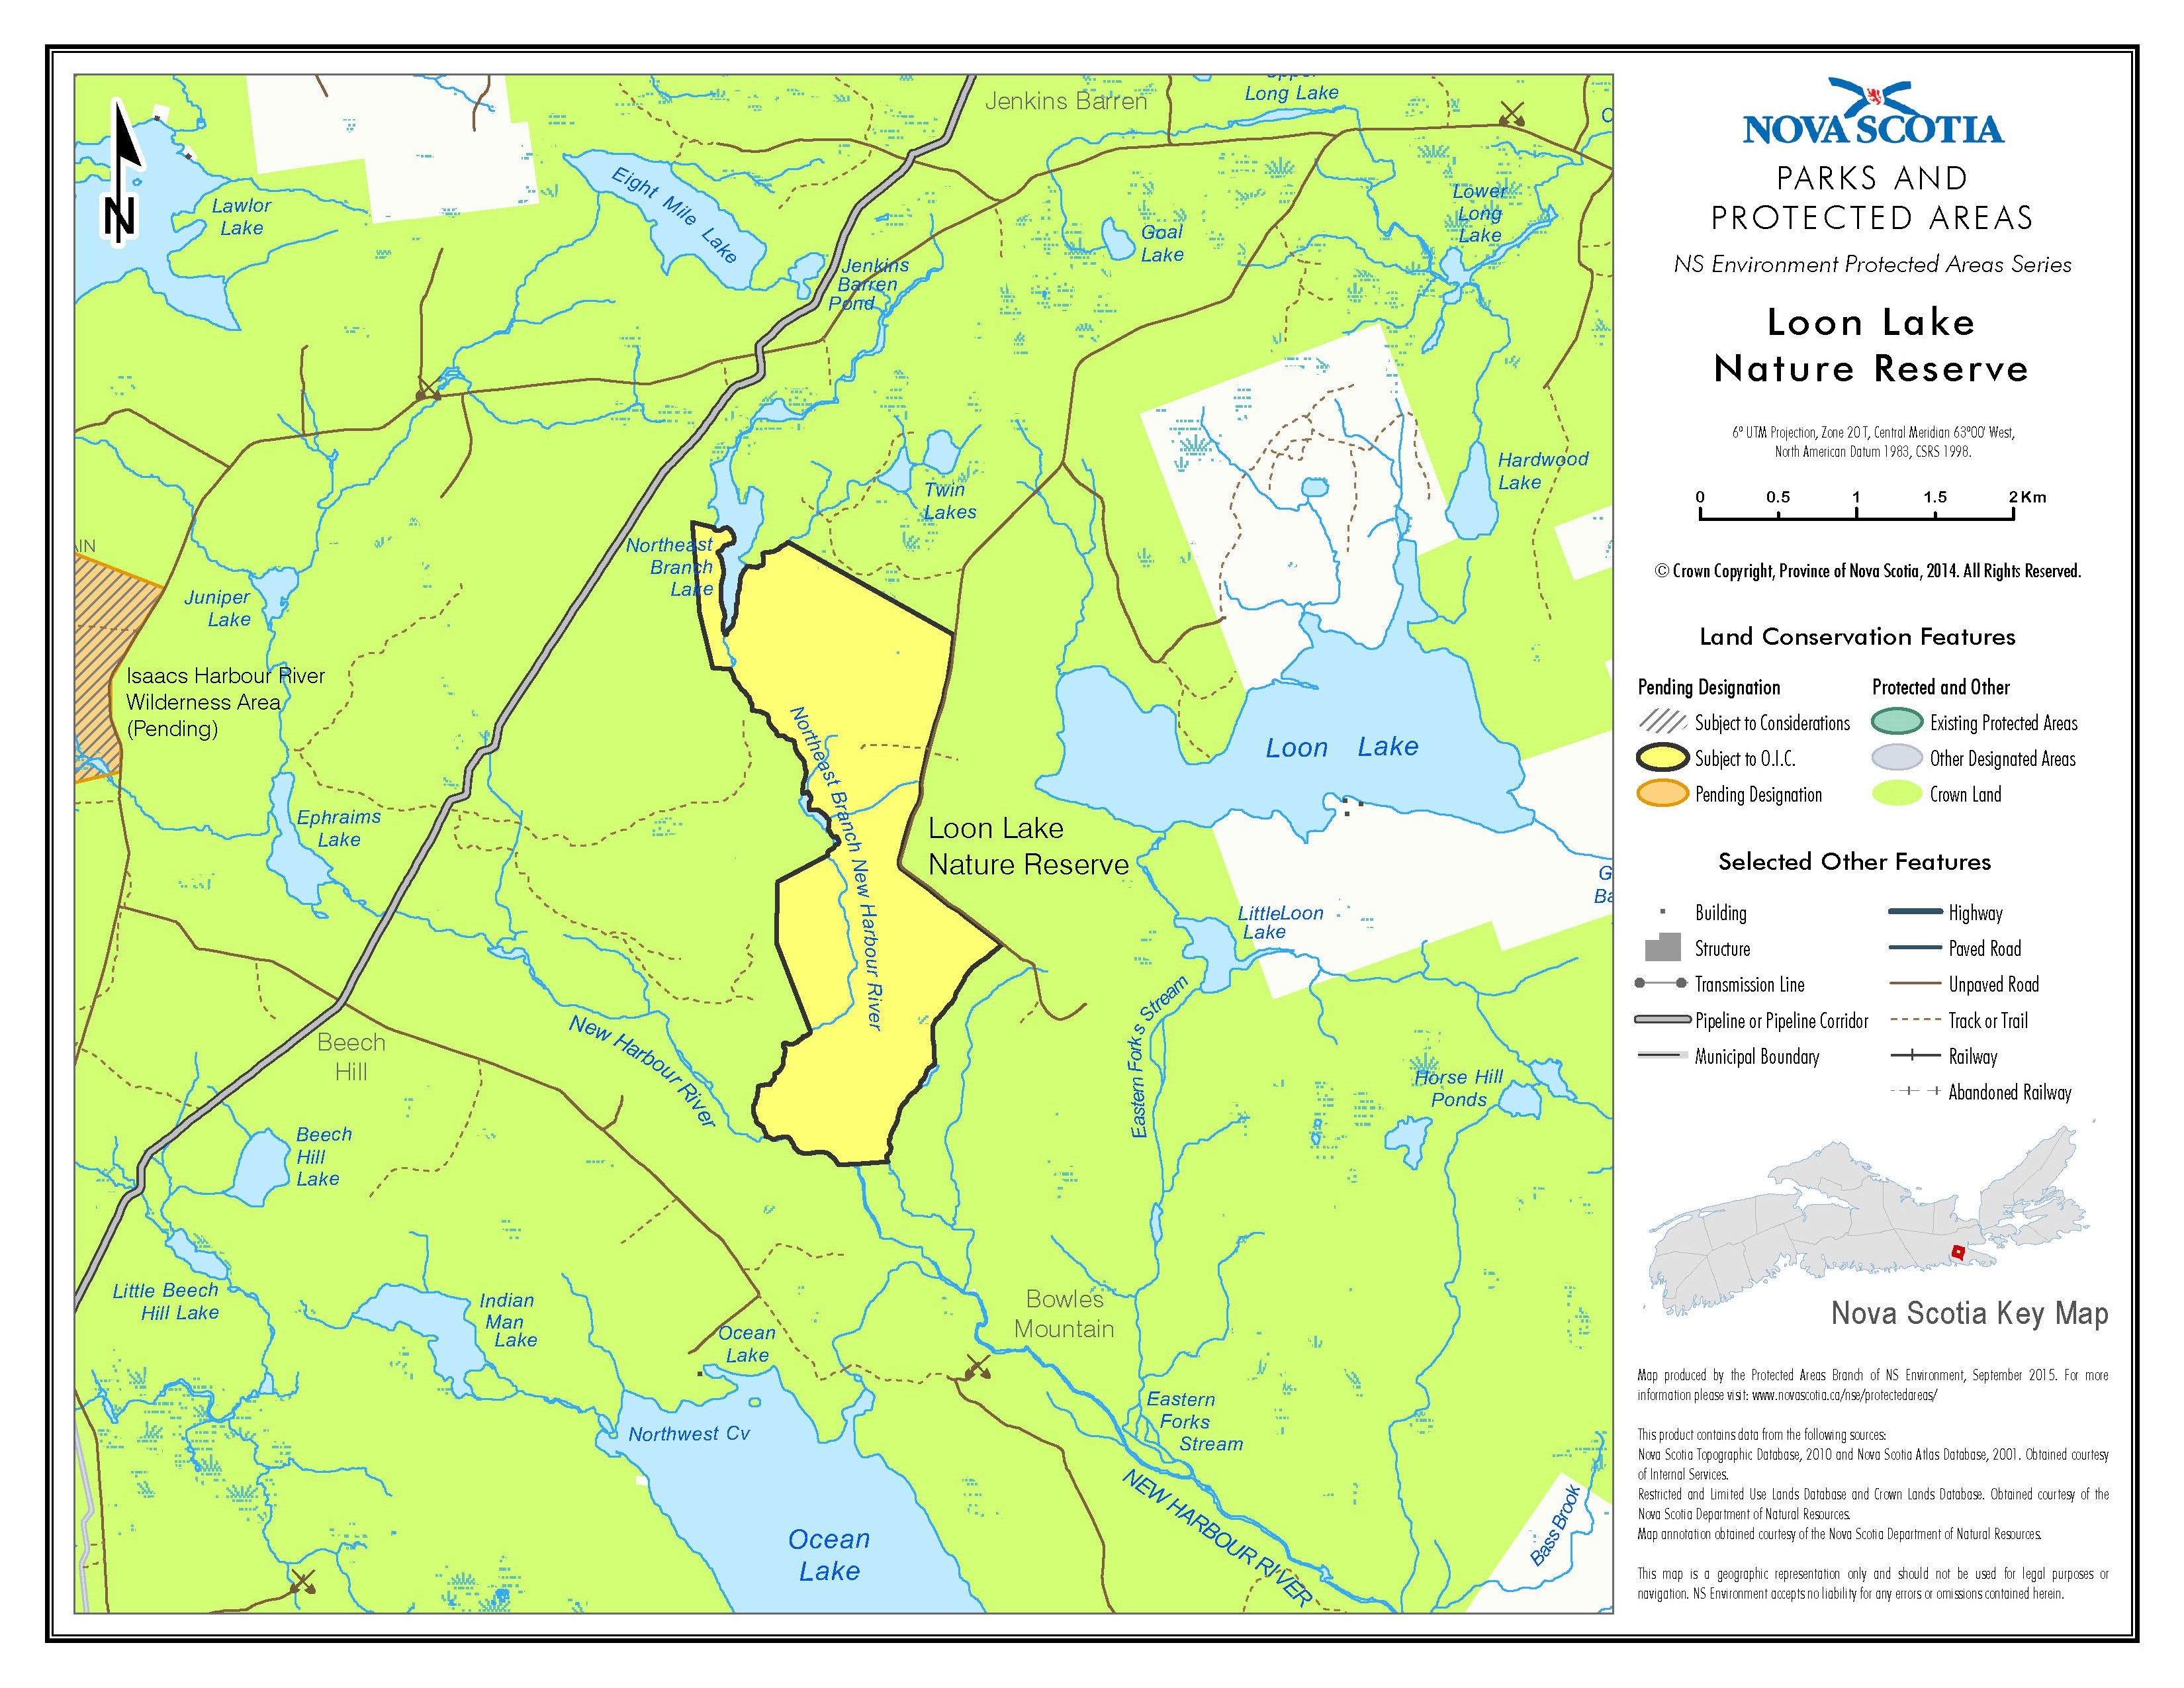 Approximate boundaries of Loon Lake Nature Reserve